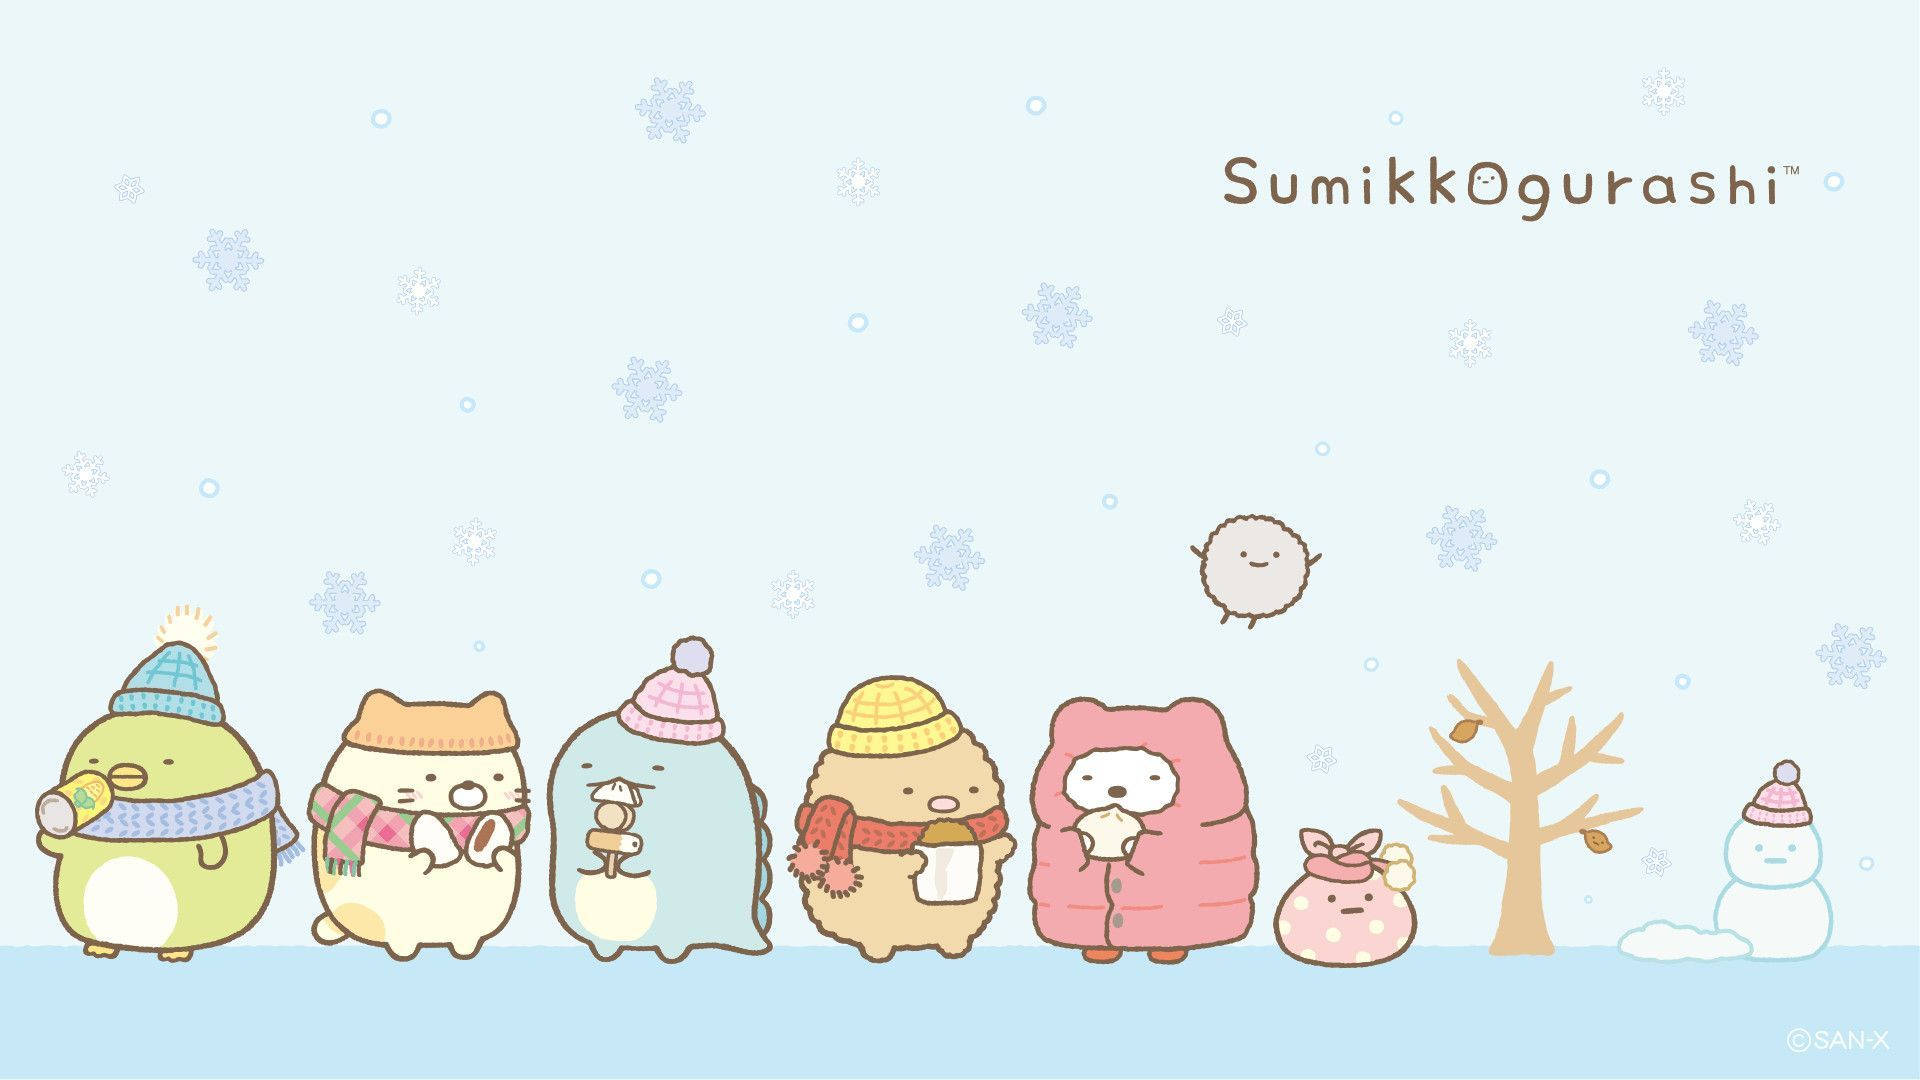 Sumikko Gurashi With Snowman Background